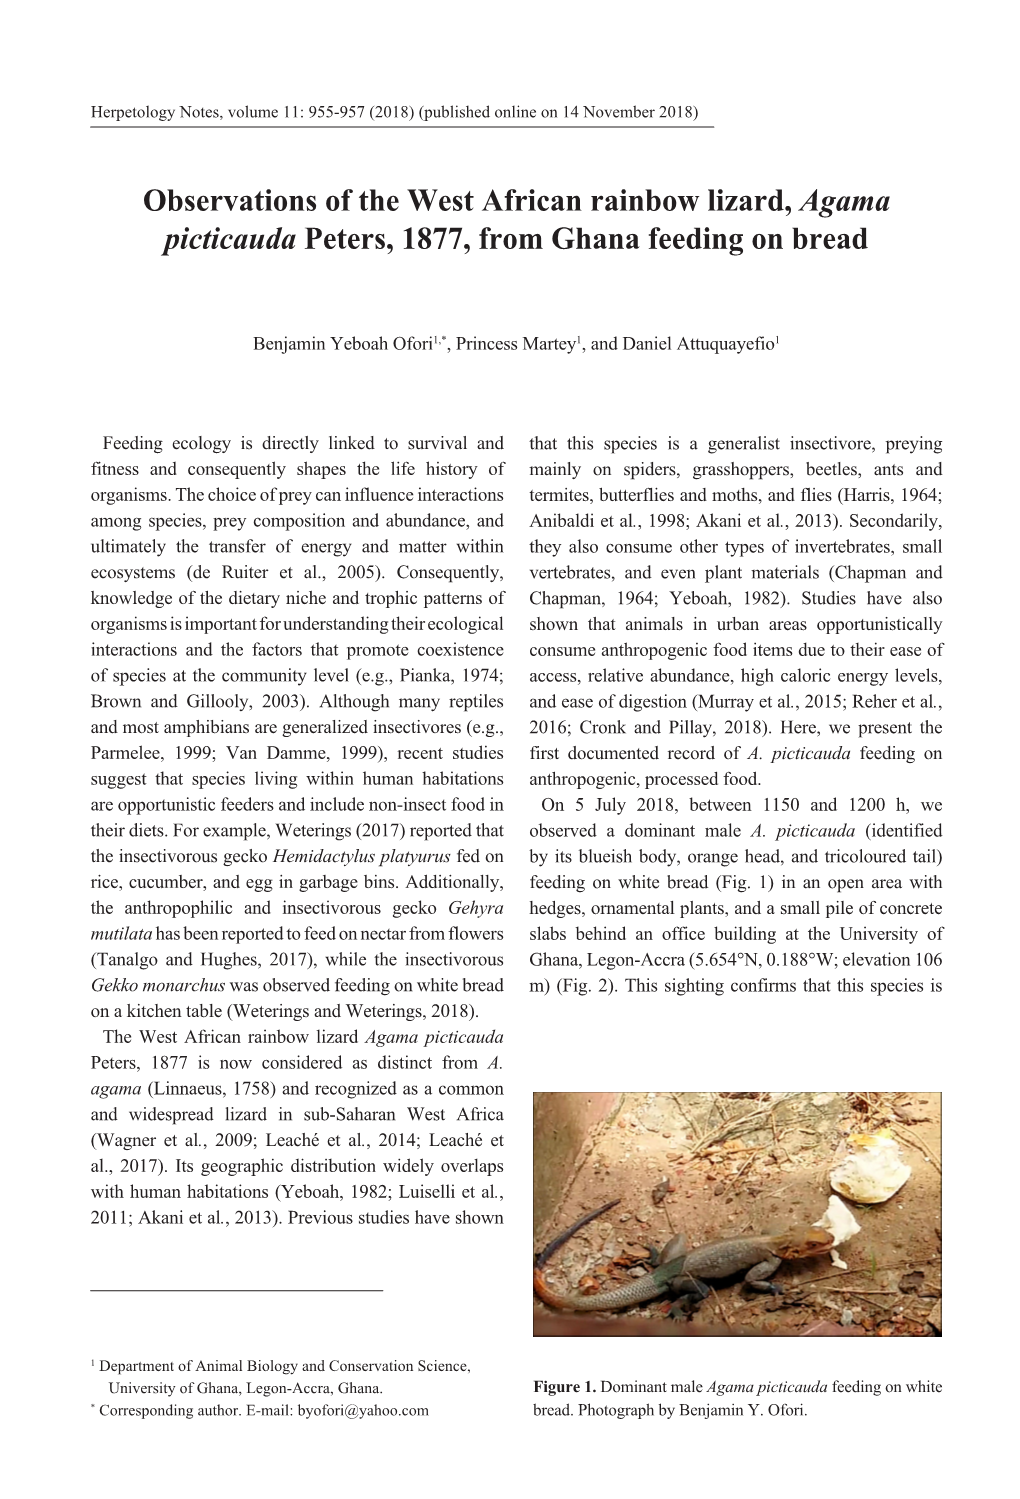 Observations of the West African Rainbow Lizard, Agama Picticauda Peters, 1877, Fro Hana Feedin on Bread